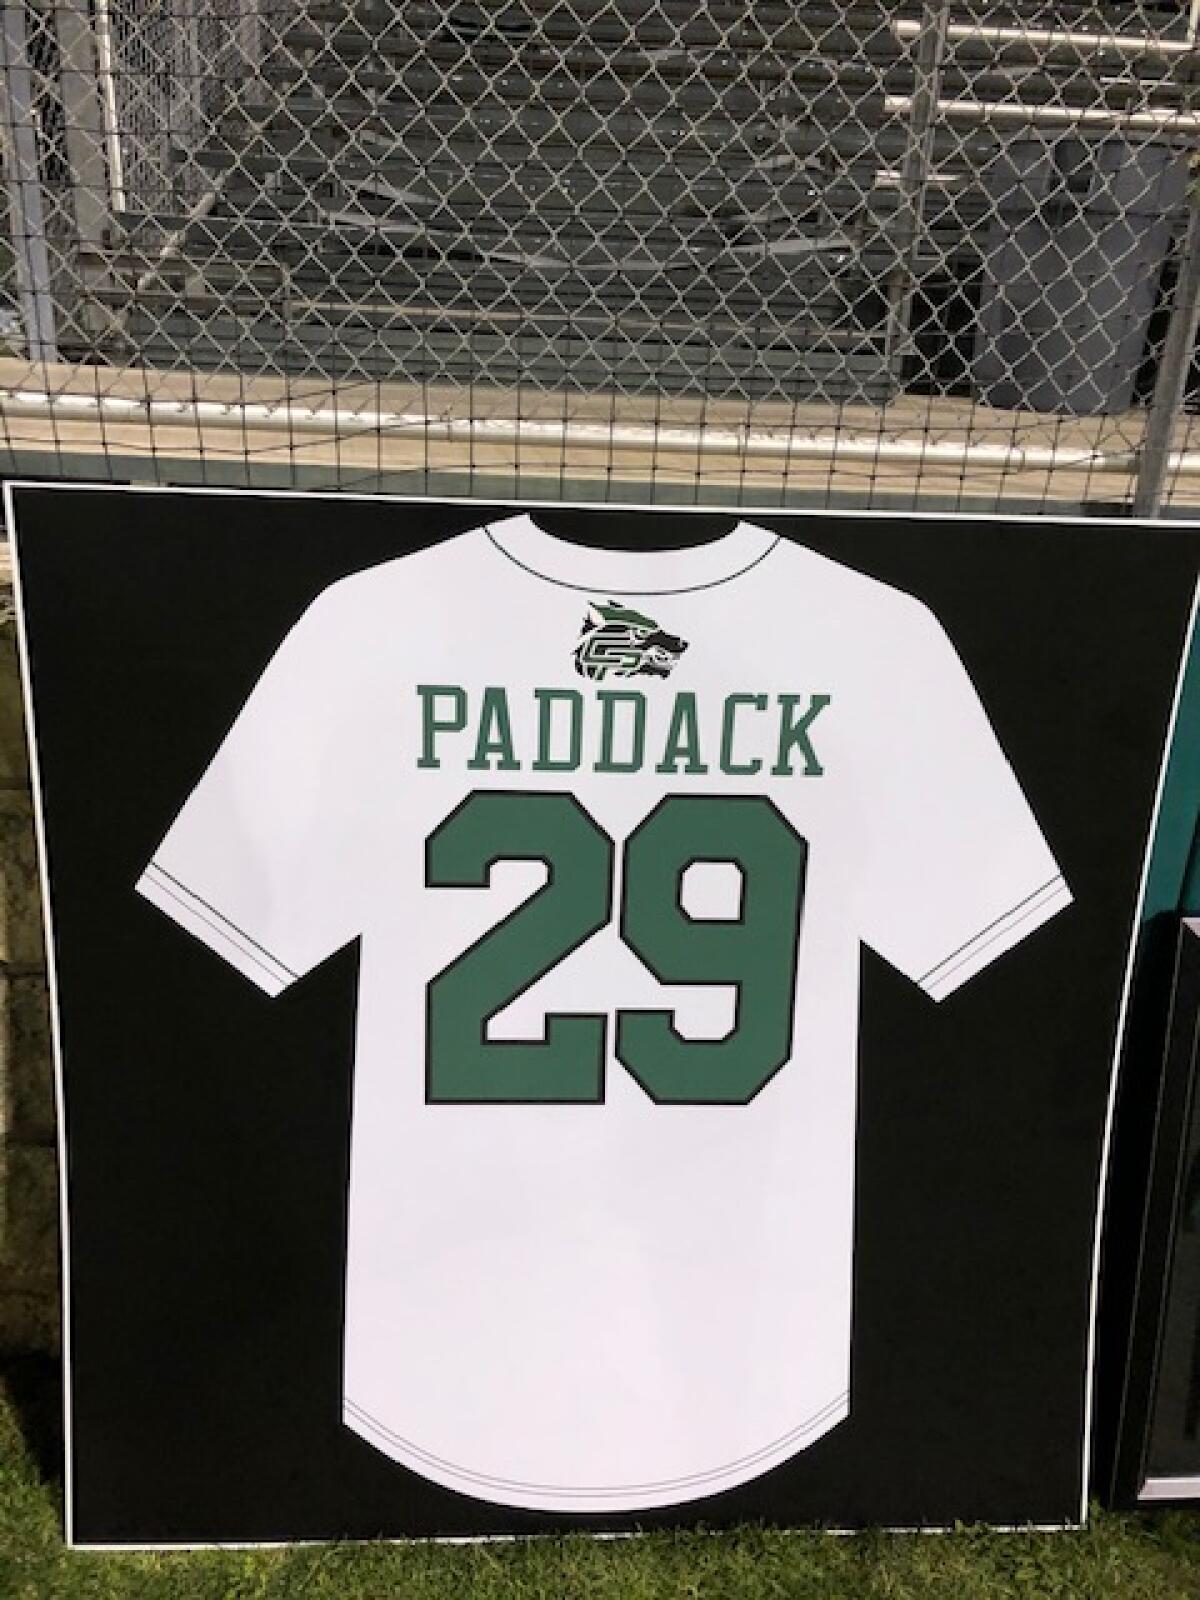 Chris Paddack's number was retired by the Cedar Park High School baseball program.